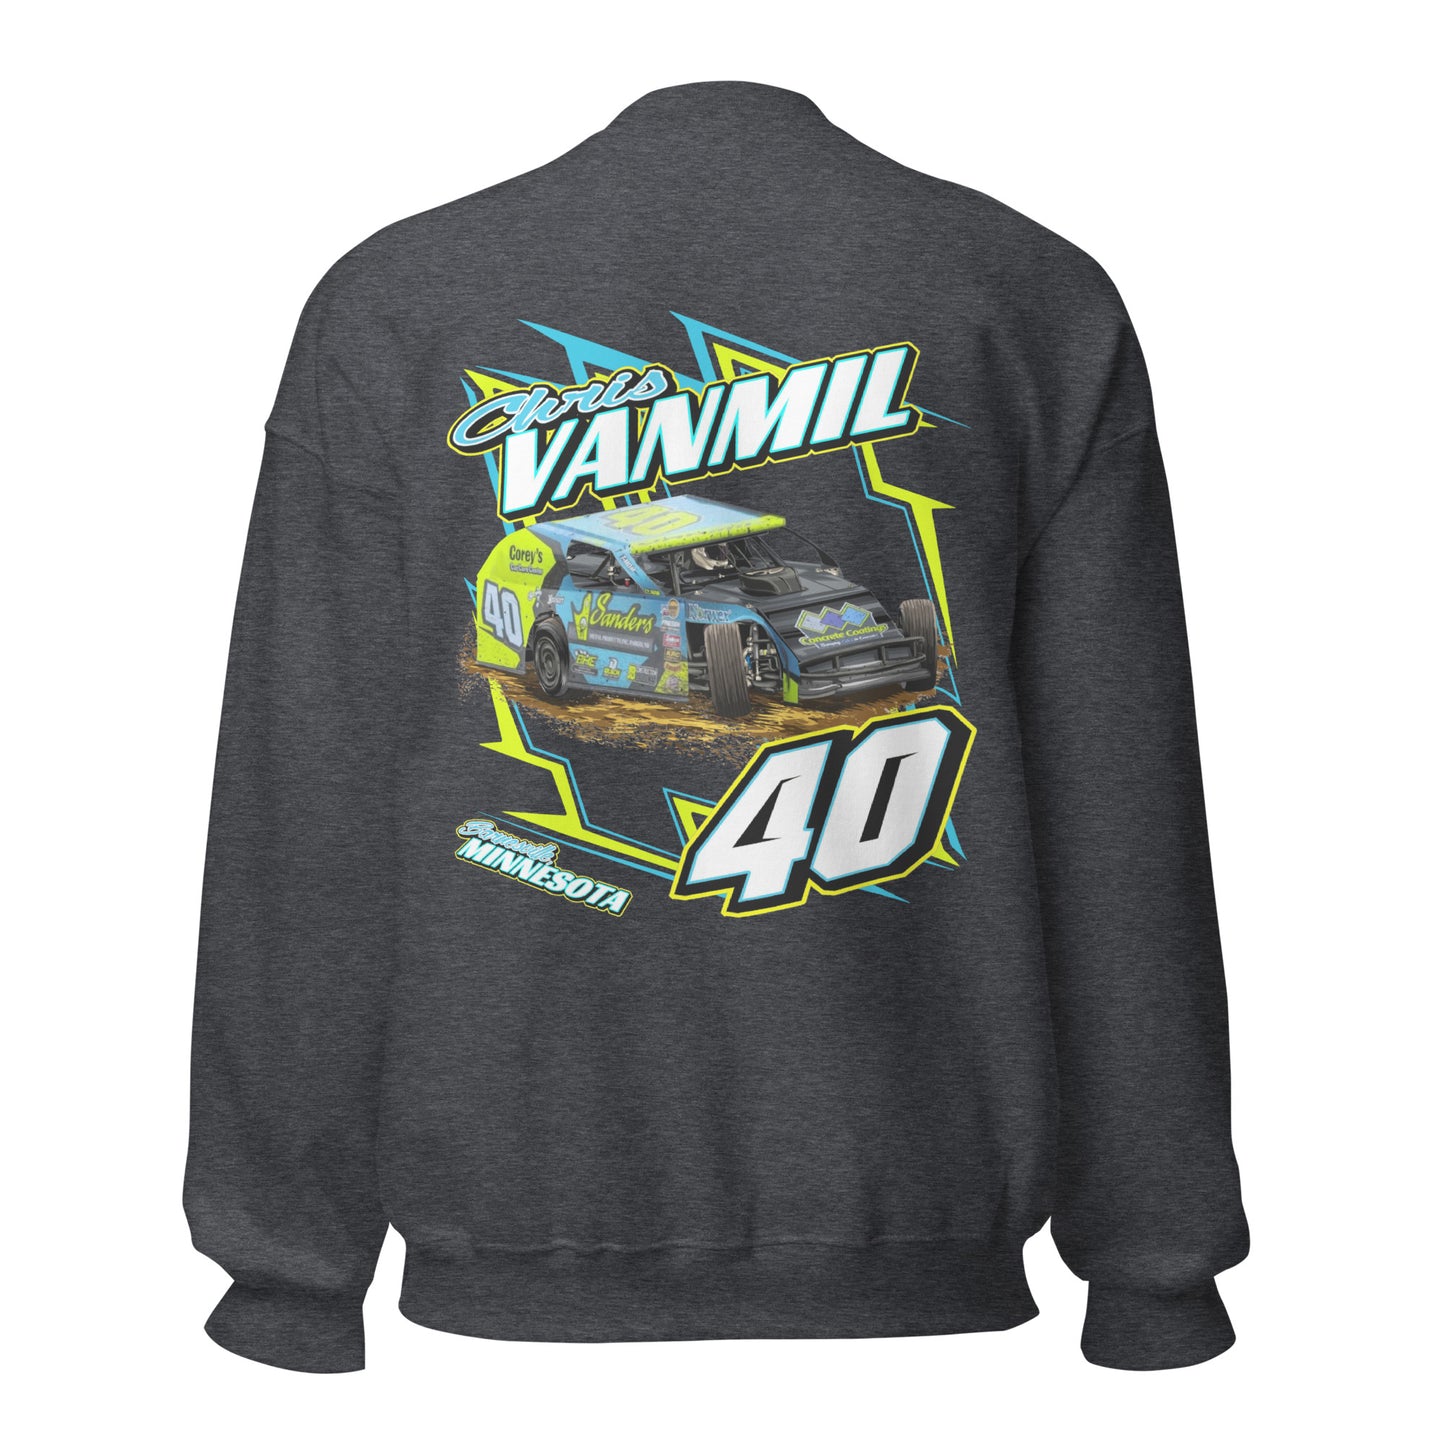 Chris Vanmil Adult Crew Sweatshirt